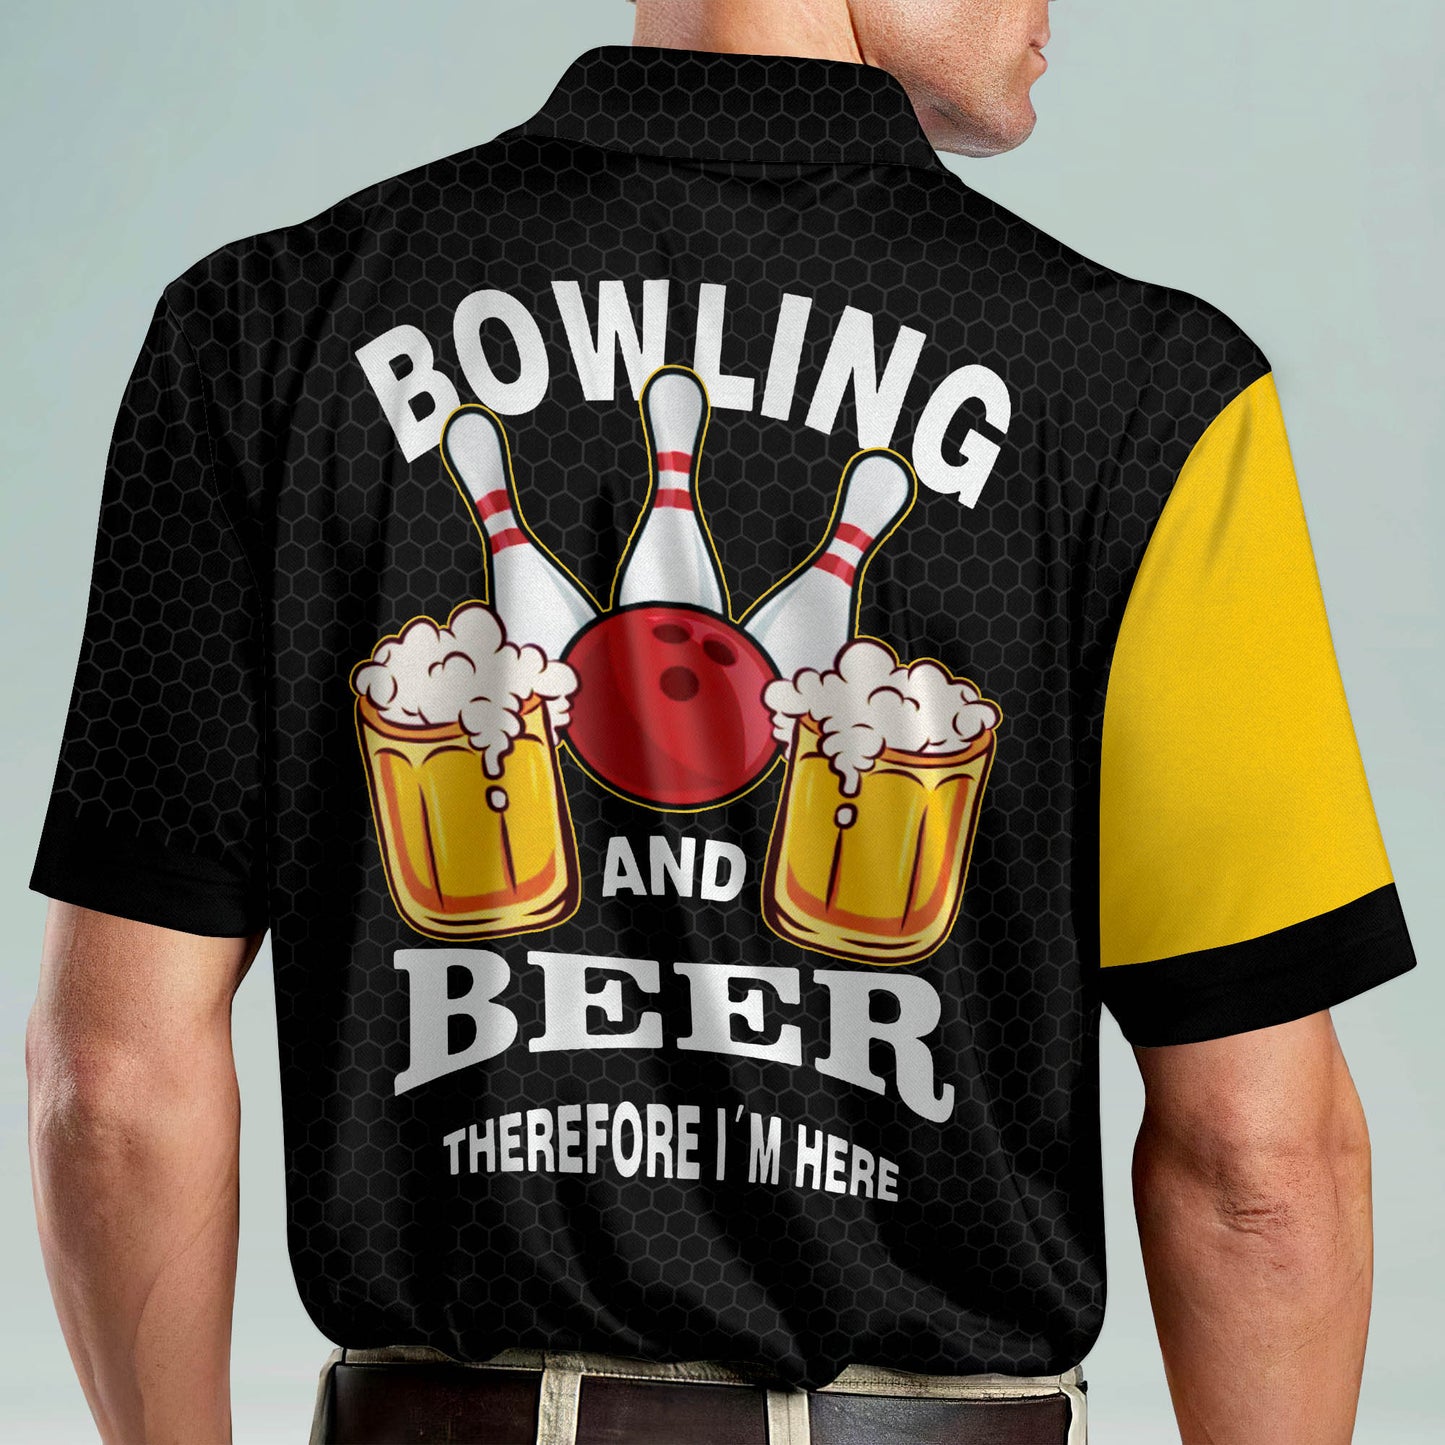 Custom Bowling Shirts For Men - Men's Custom Funny Bowling Shirts With Logo - Crazy Bowling Shirts - Beer Short Sleeve Bowling Polo Shirts For Men BM0097